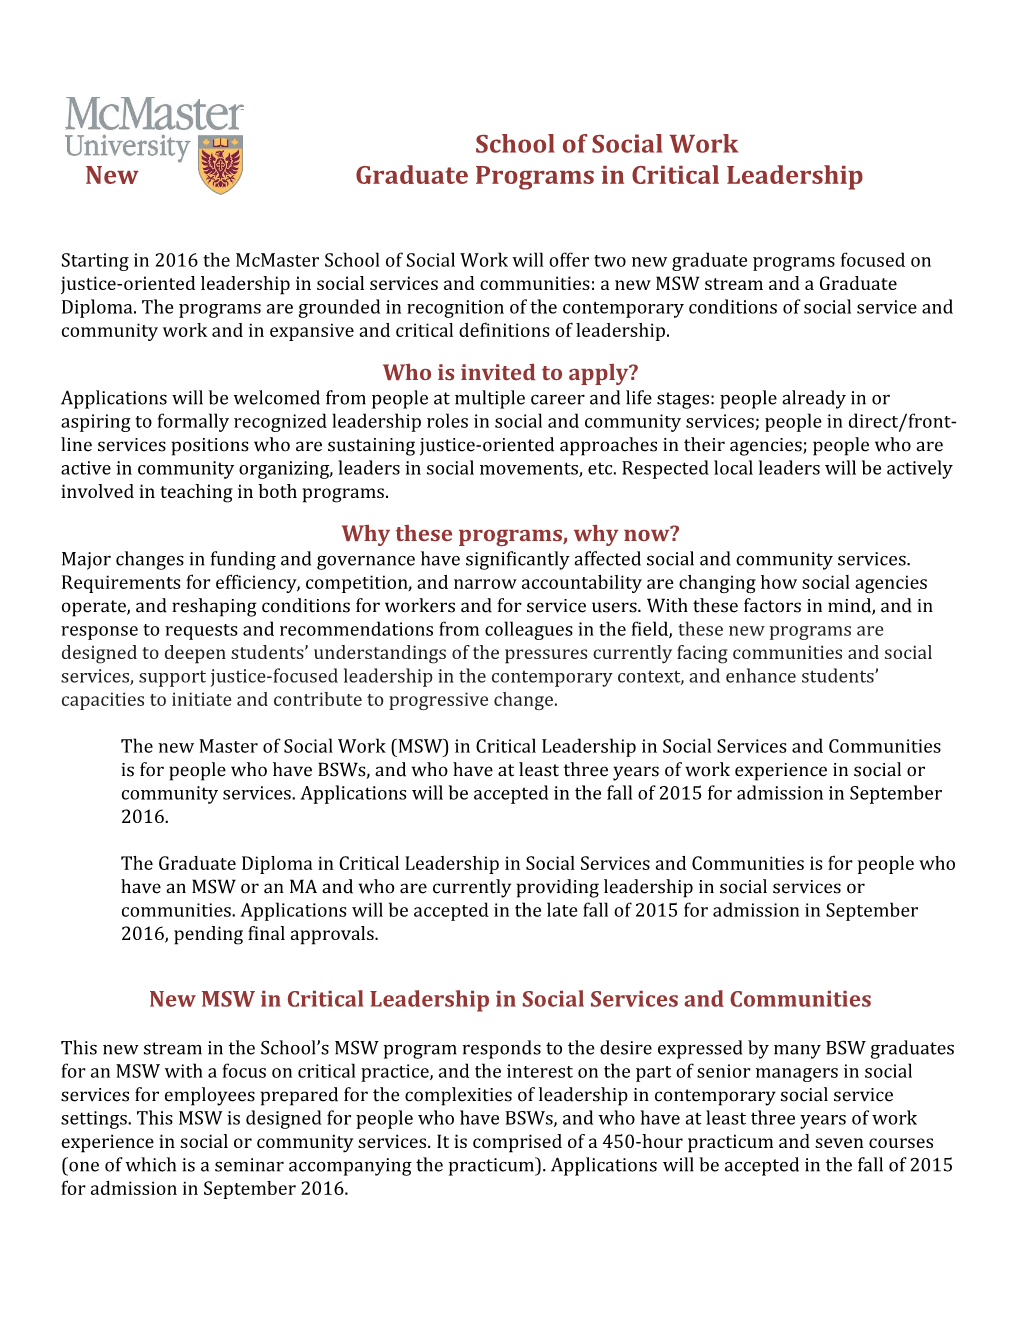 Brochure for New Social Work Graduate Programs